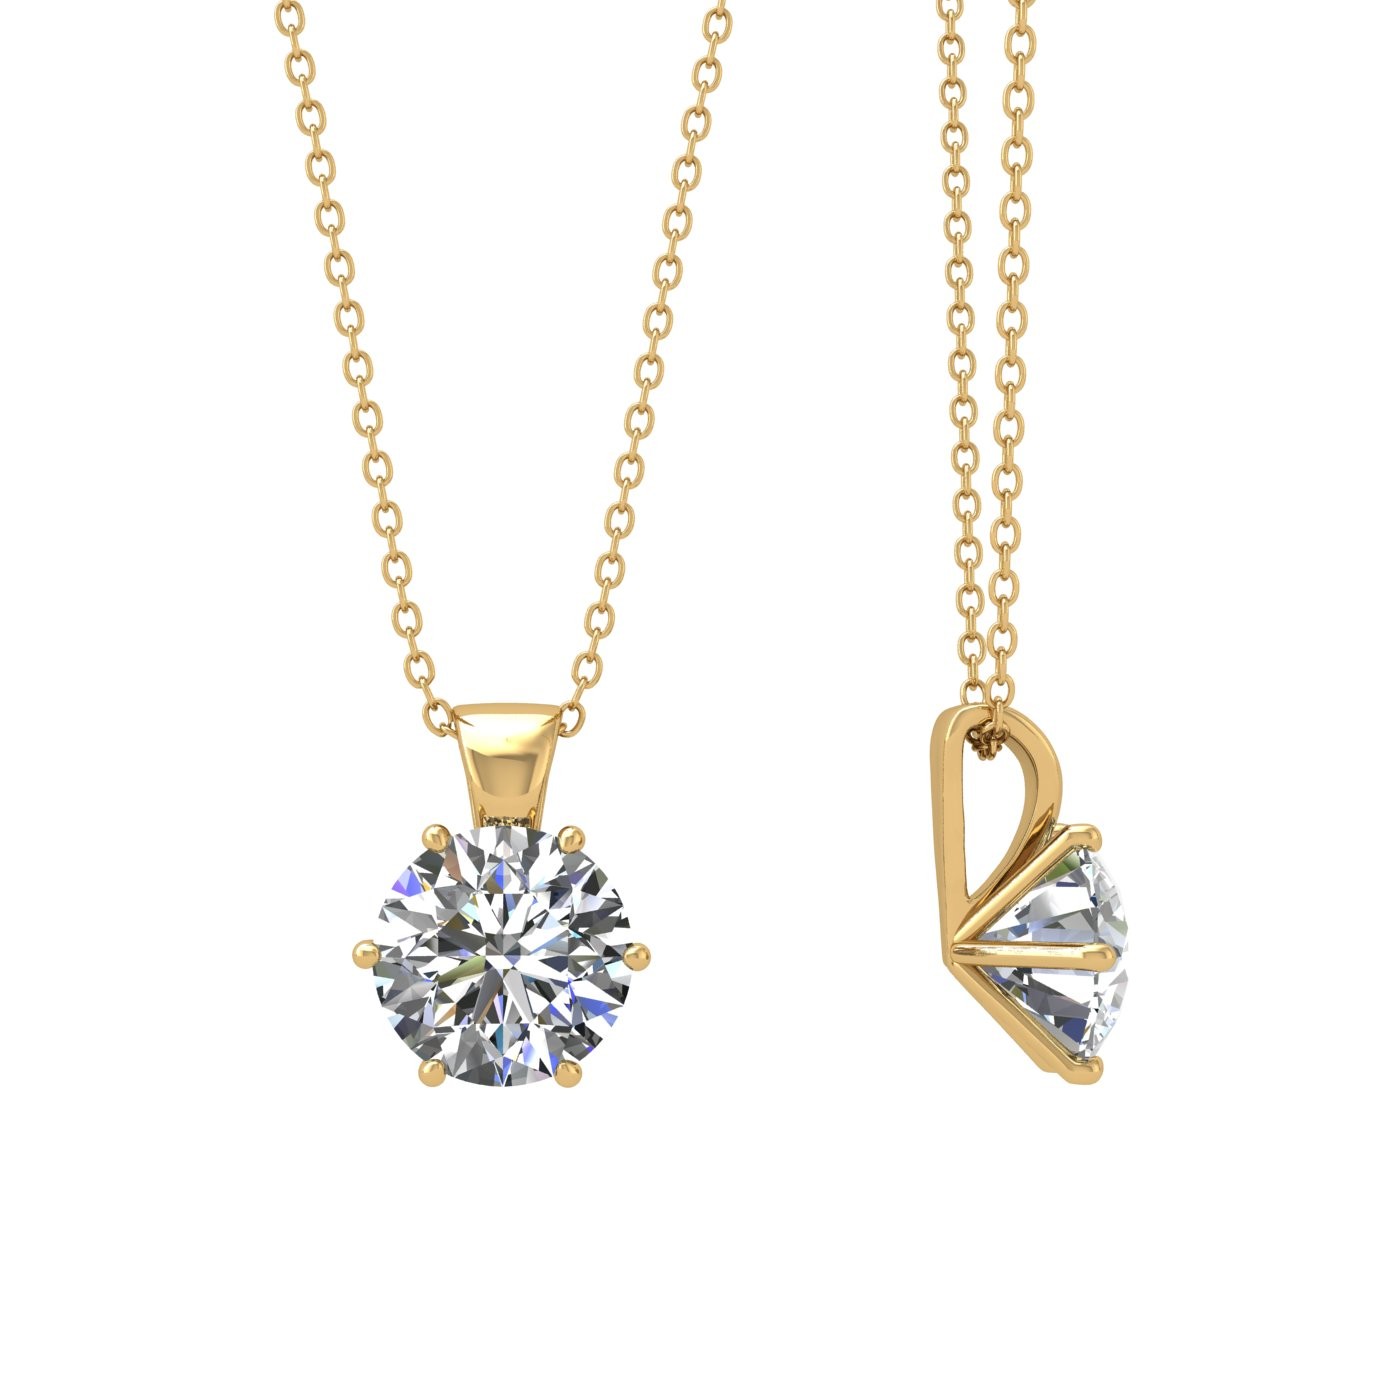 18k rose gold 1.0 ct 6 prongs round shape diamond pendant Photos & images